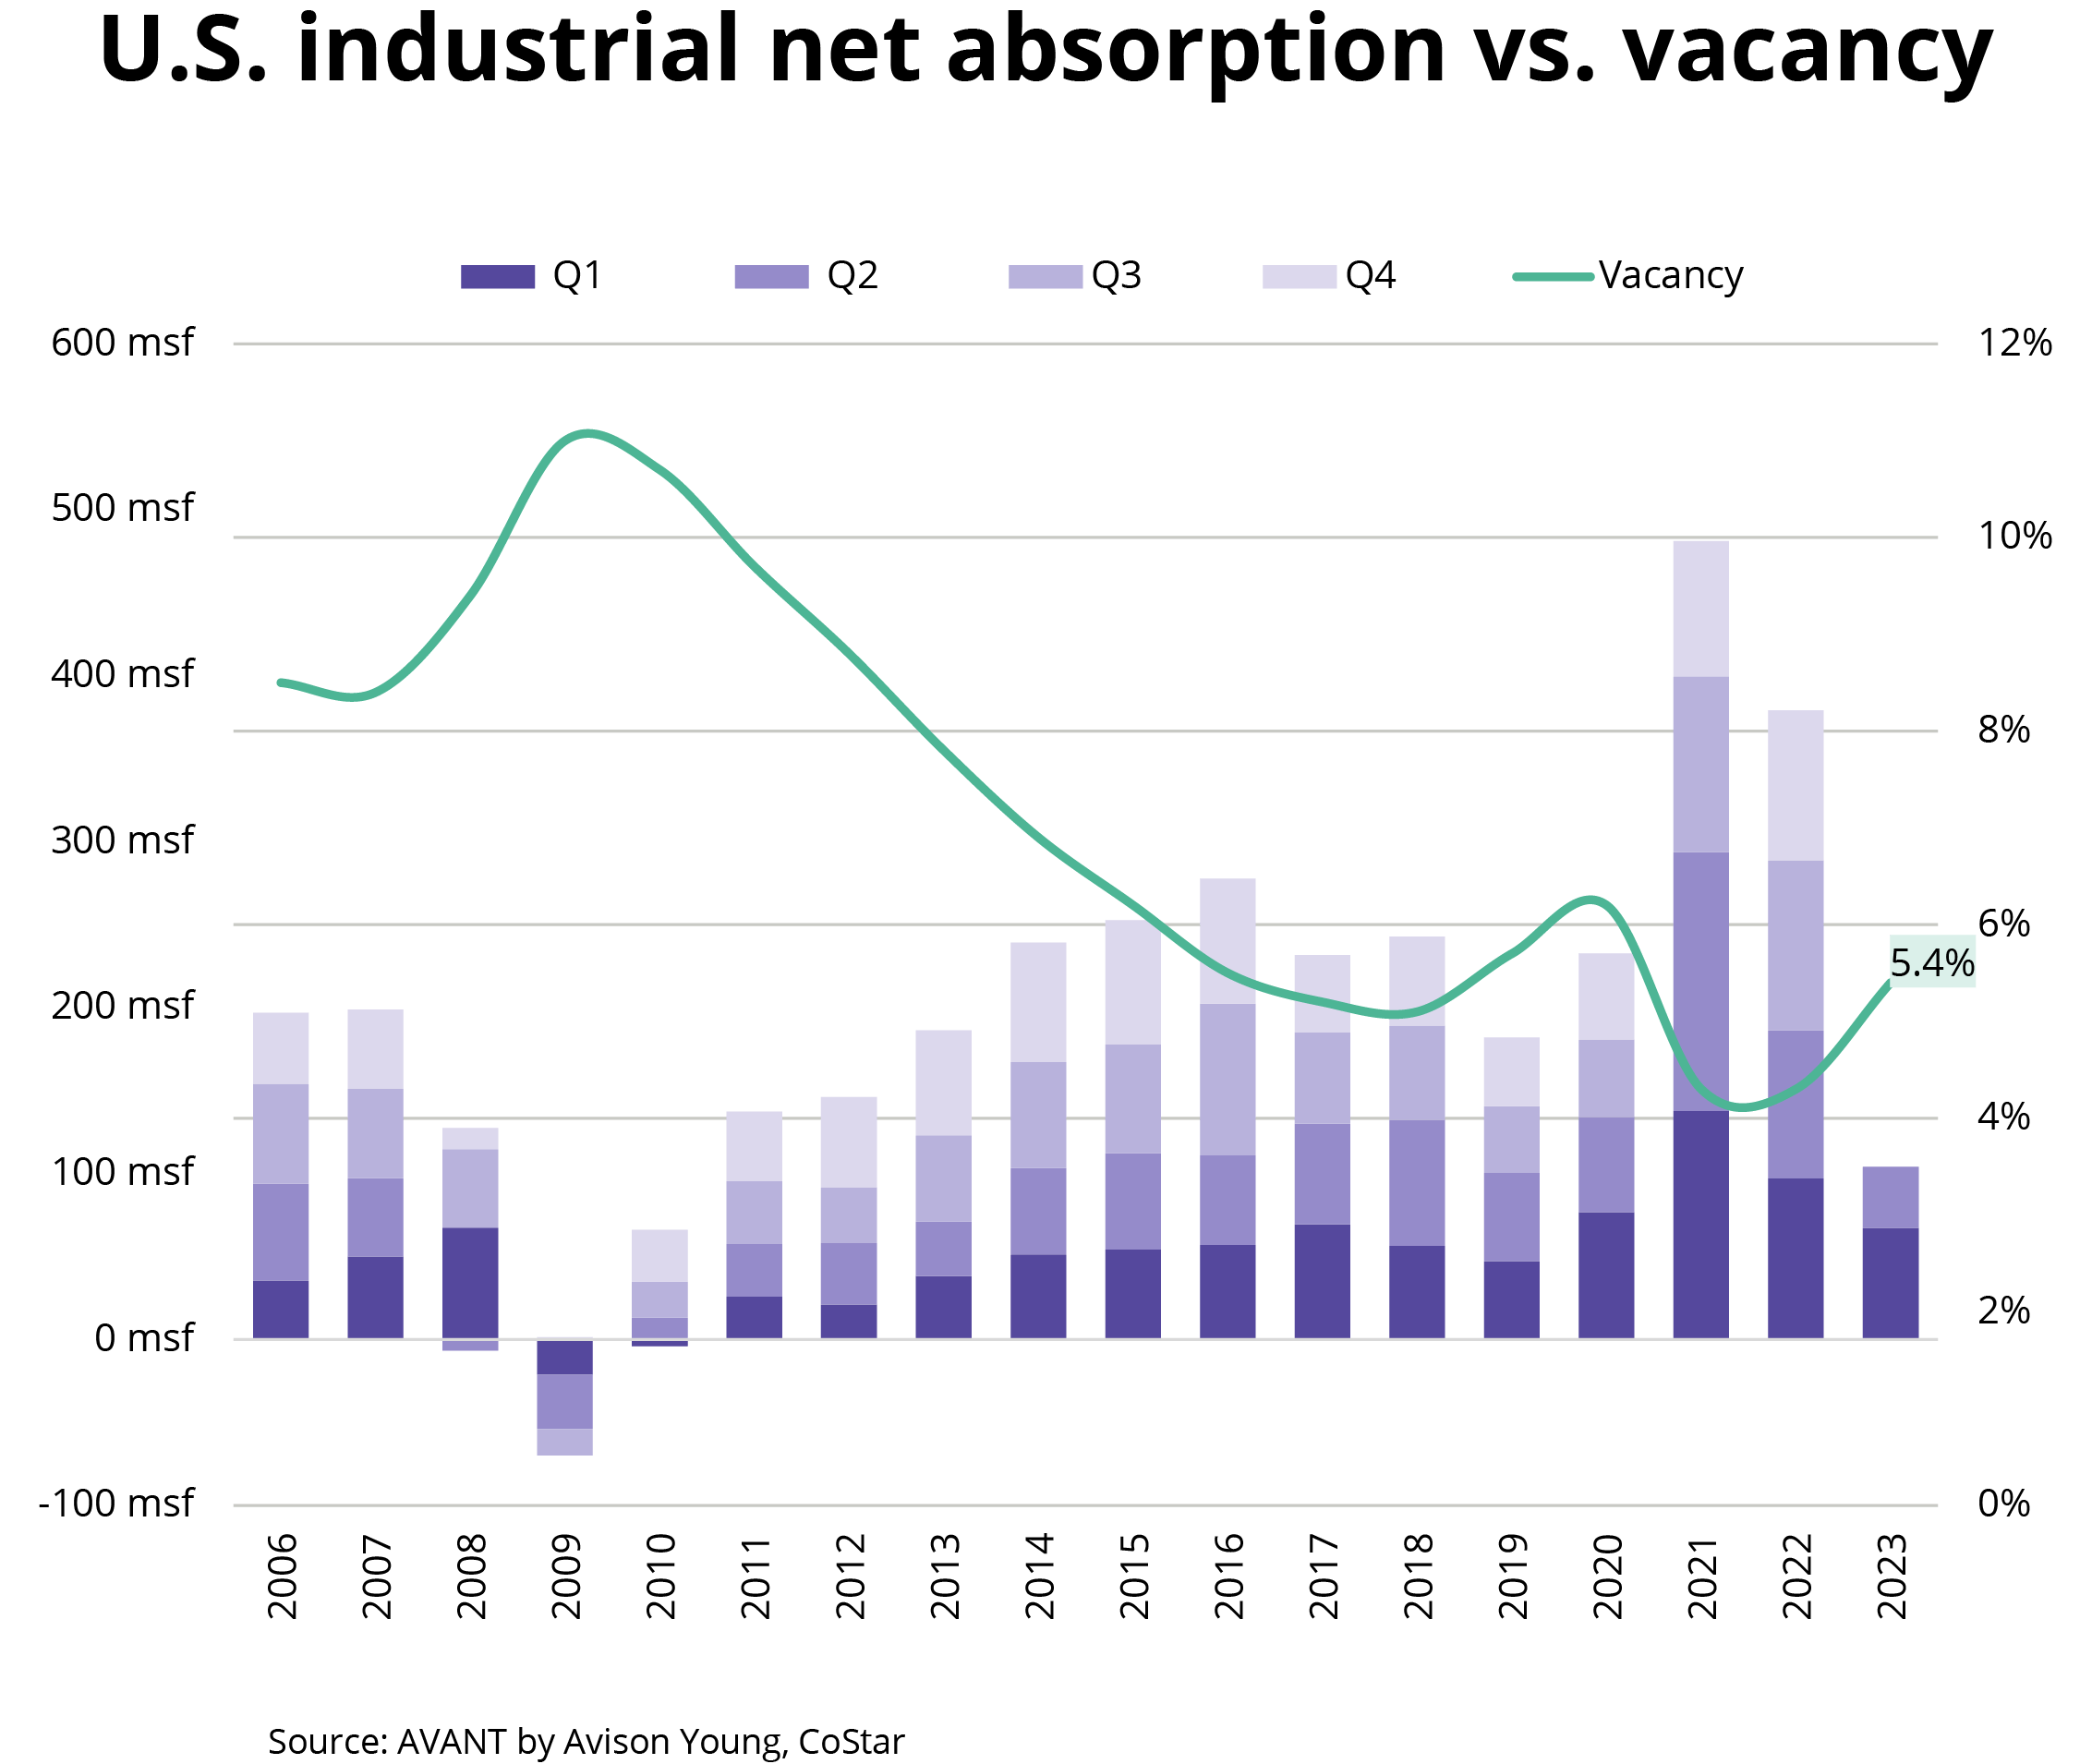 US industrial vacancy vs absorption